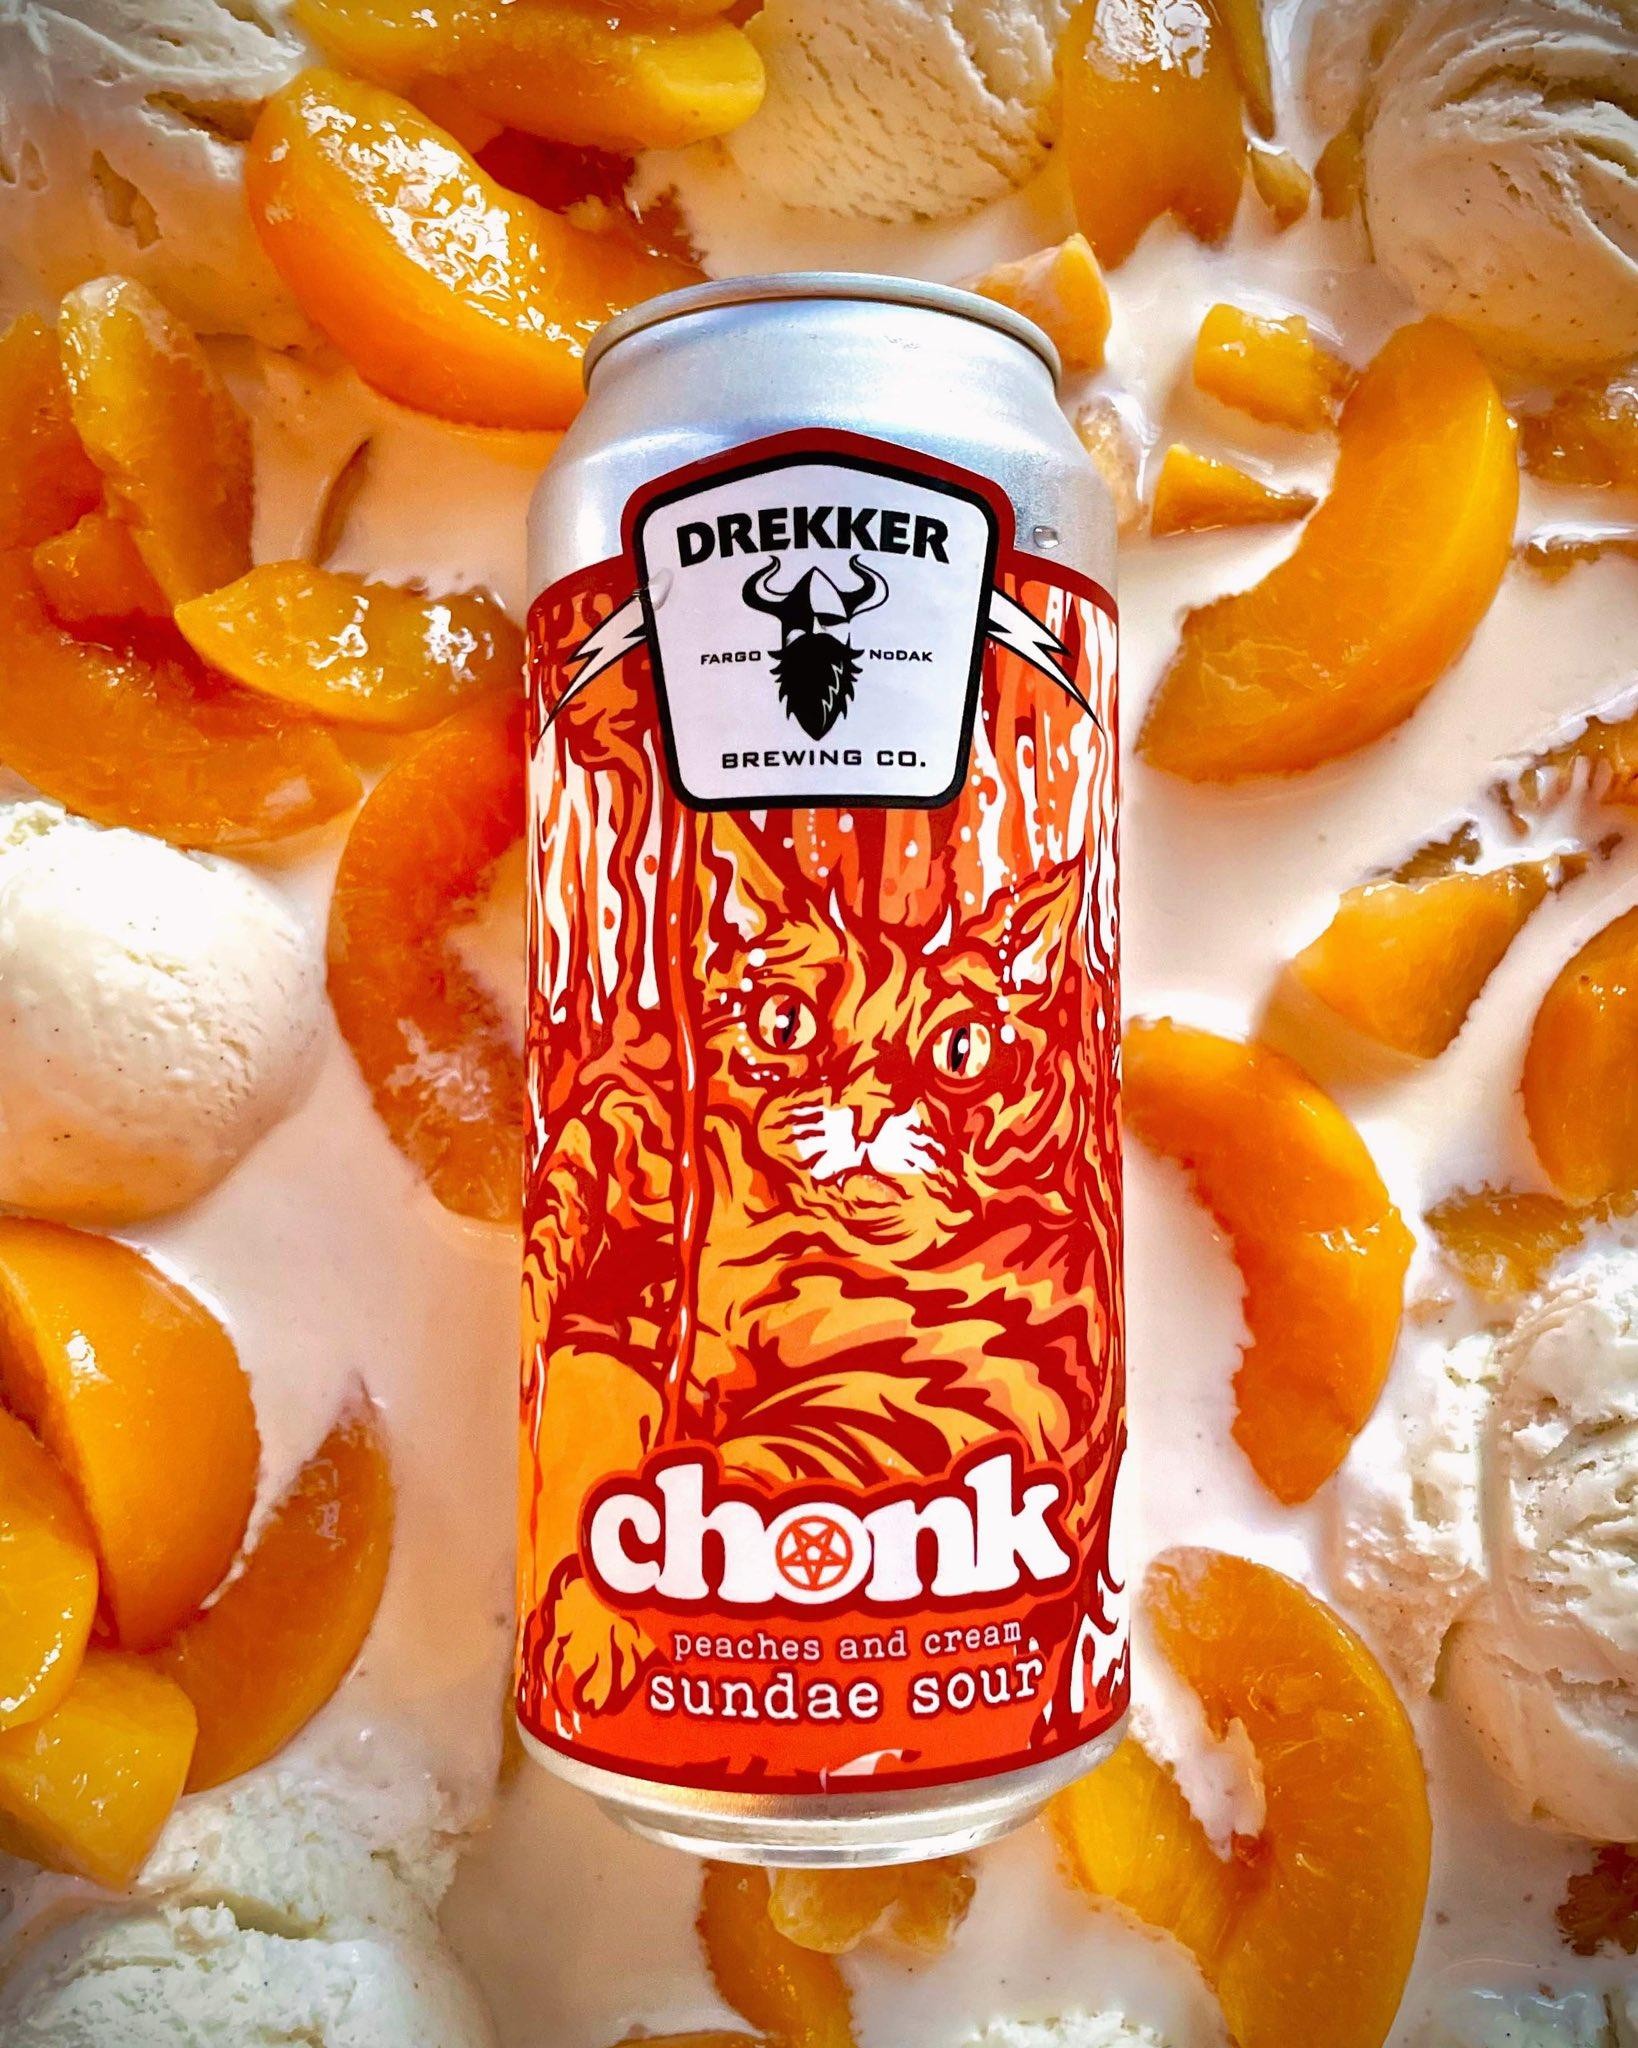 Drekker-Chonk-Peaches And Cream-Sour